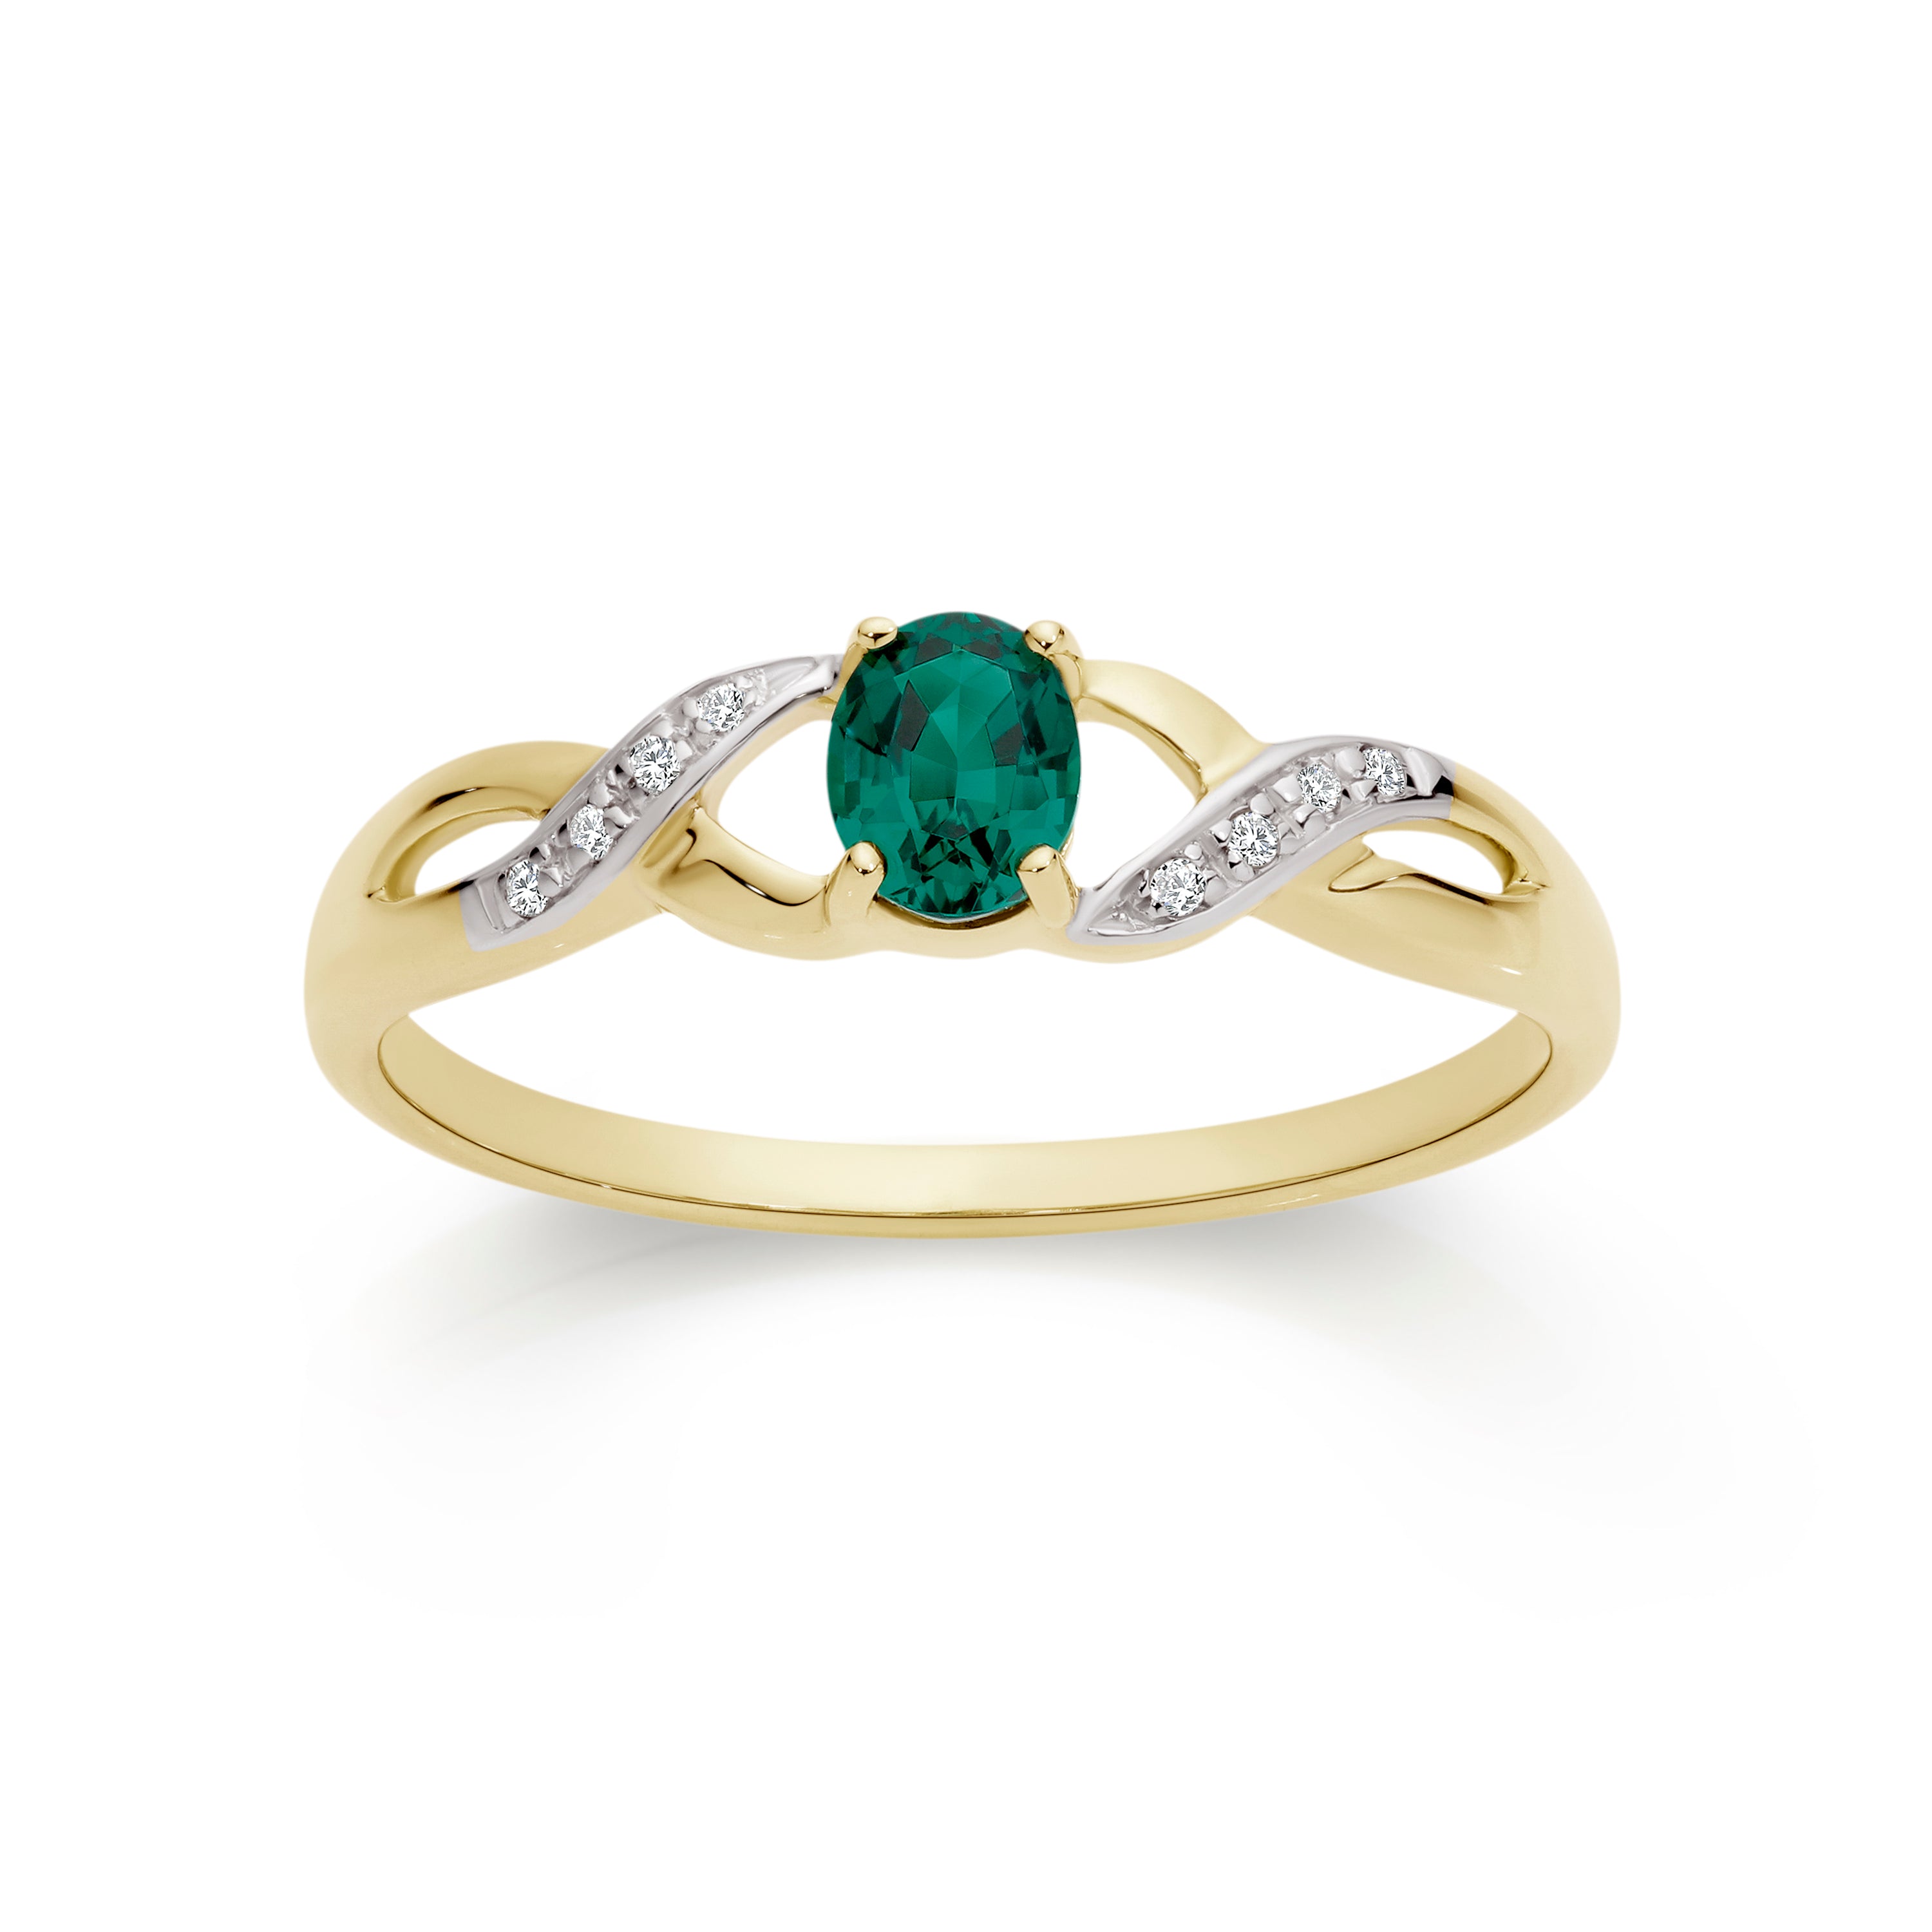 9ct gold emerald & diamond ring